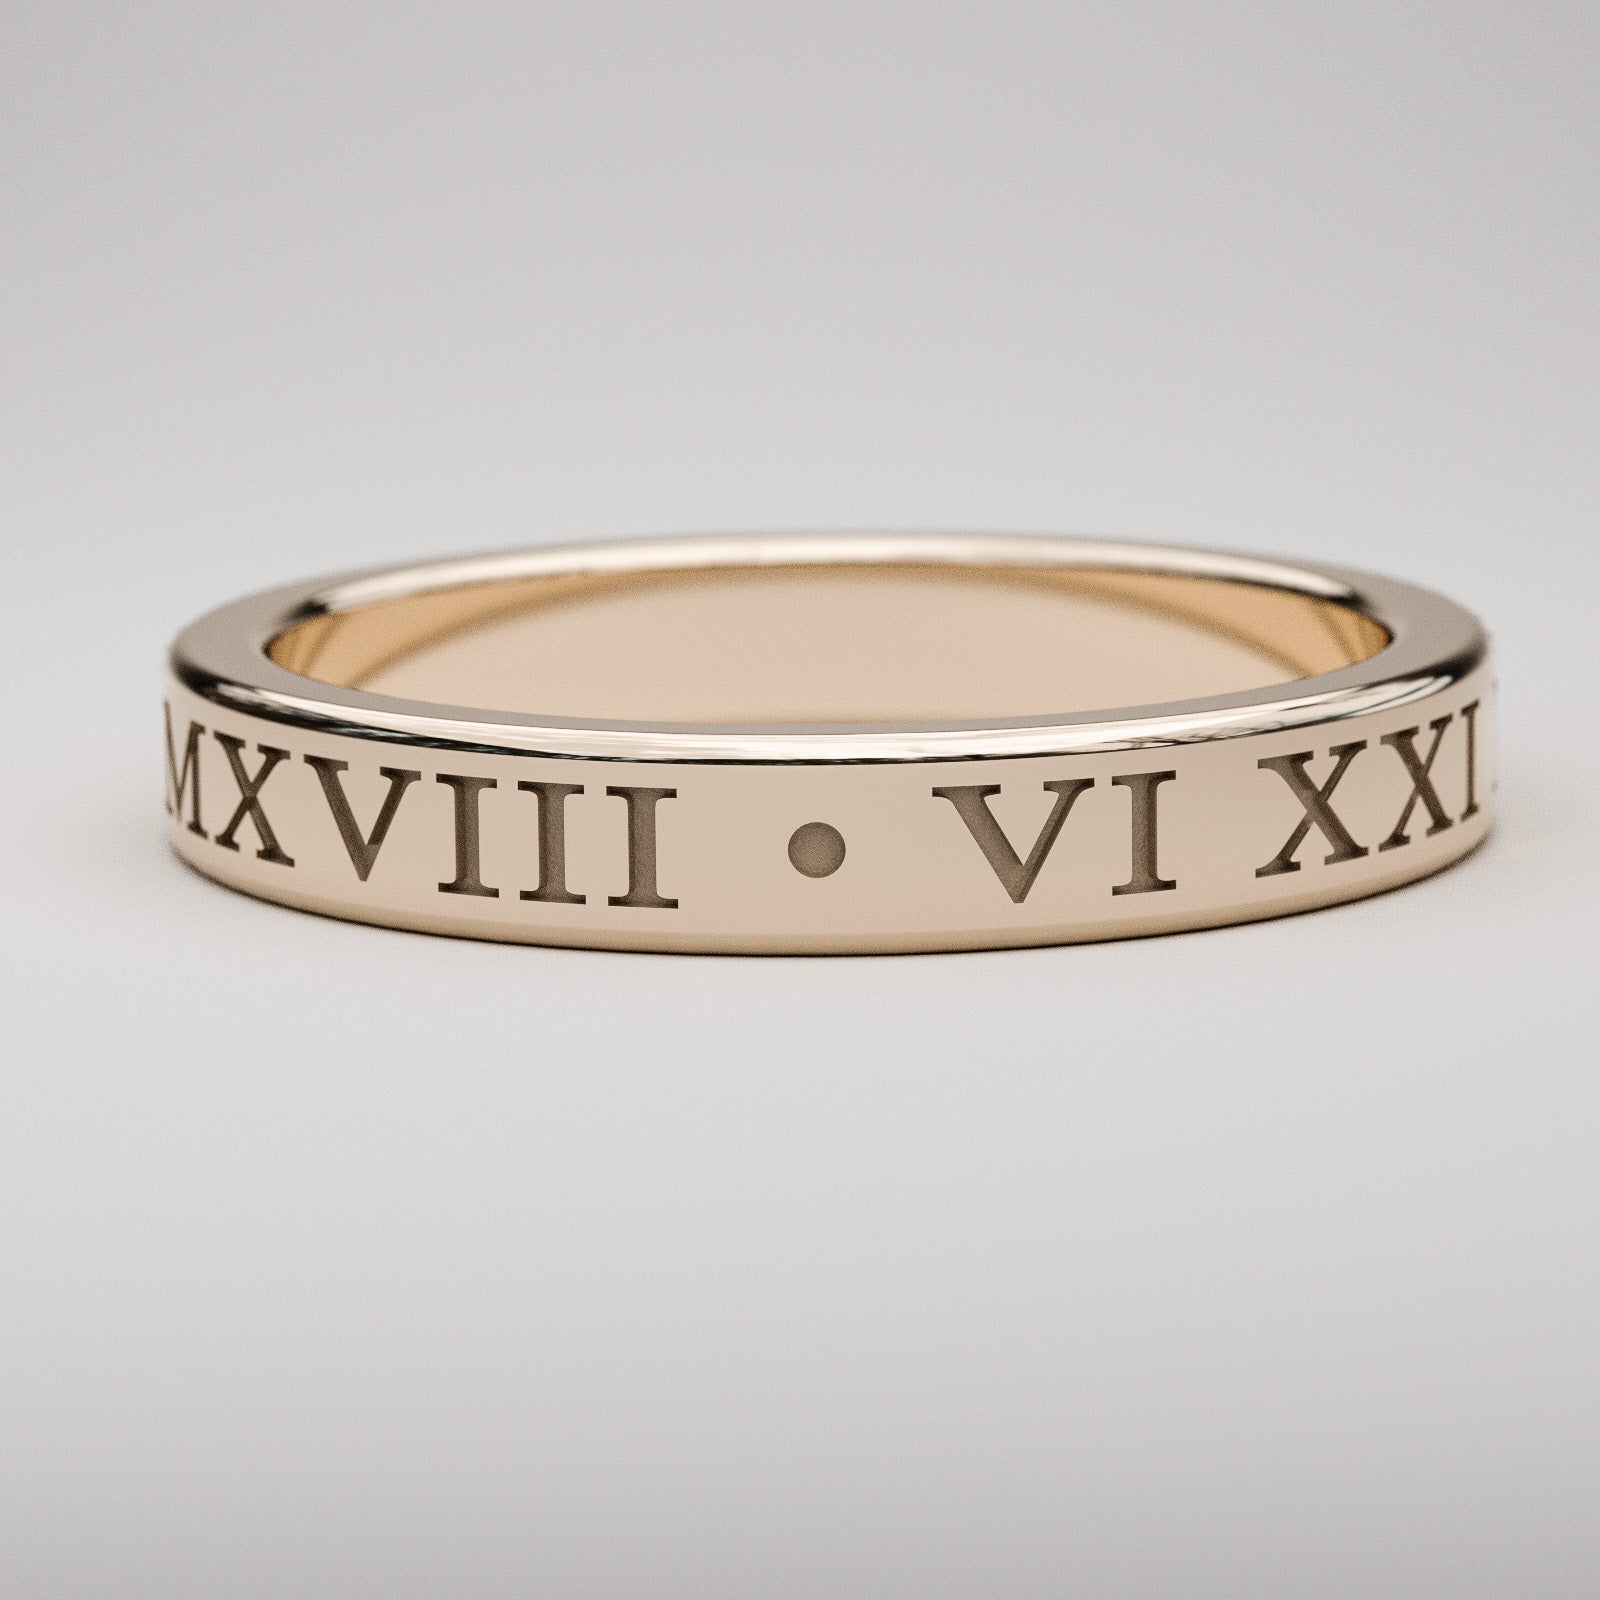 Custom date Roman Numeral ring in 14k rose gold